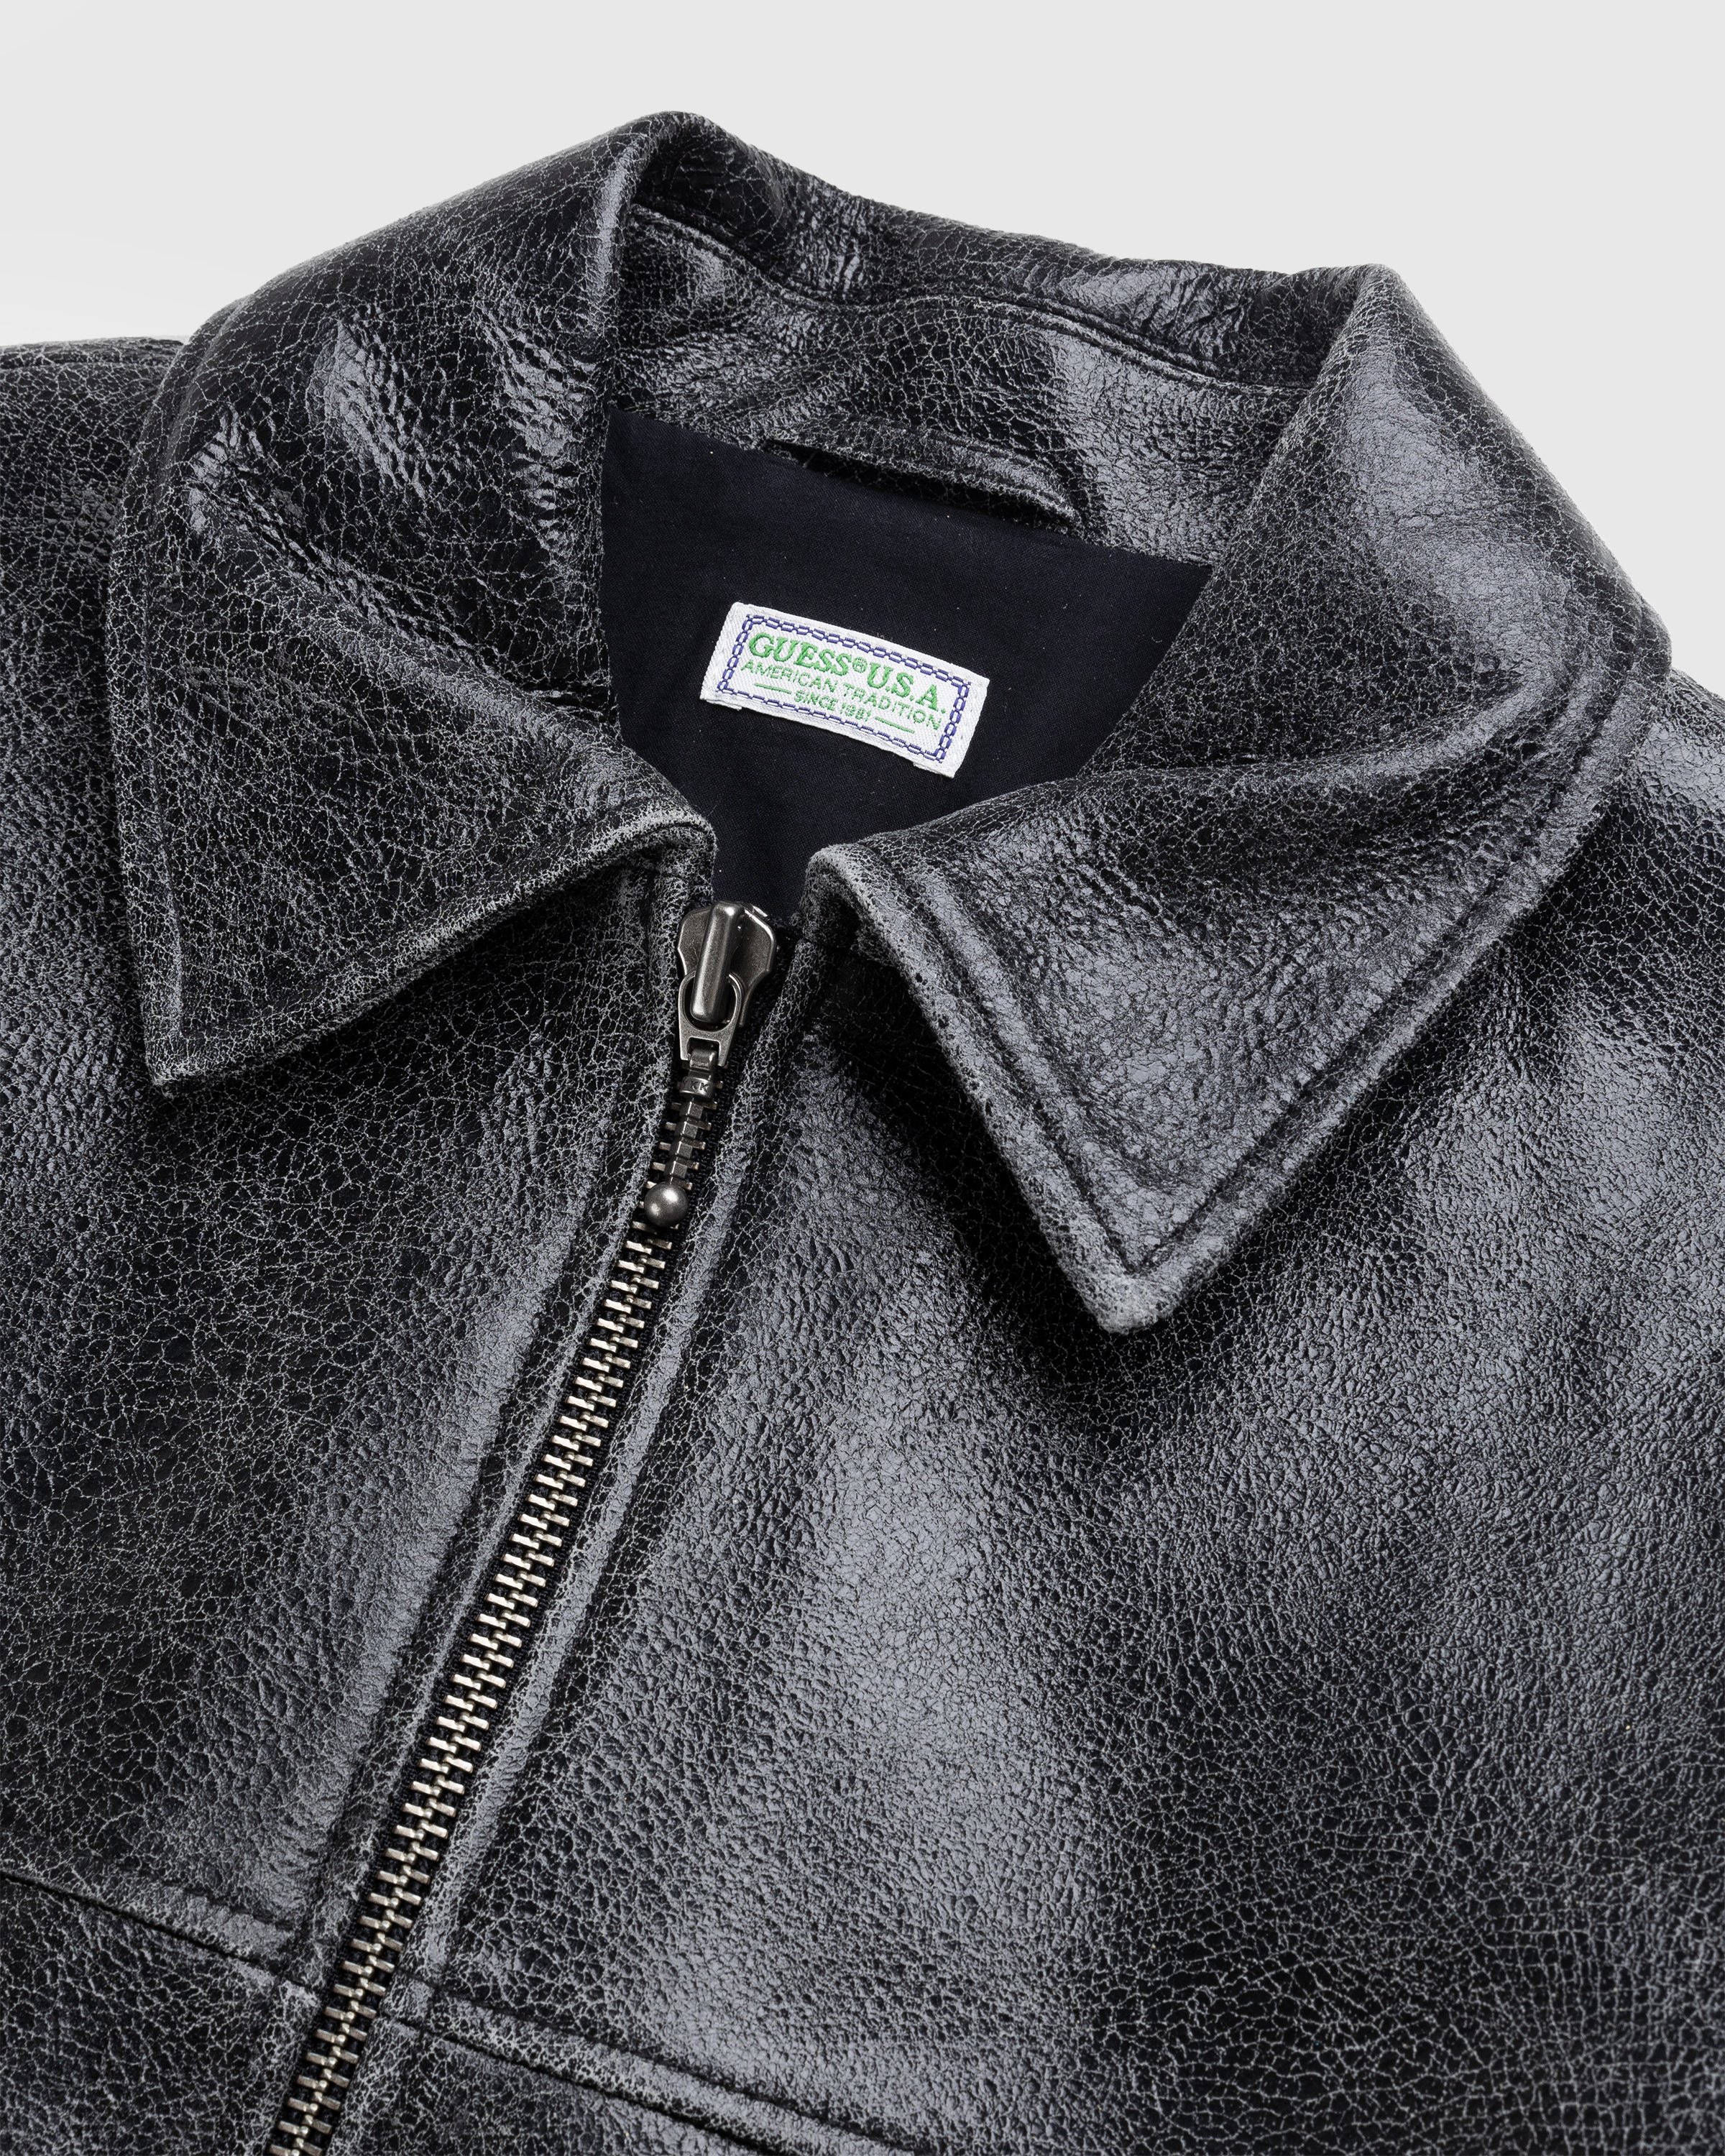 Guess USA - Crackle Leather Jacket Black - Clothing - Black - Image 5